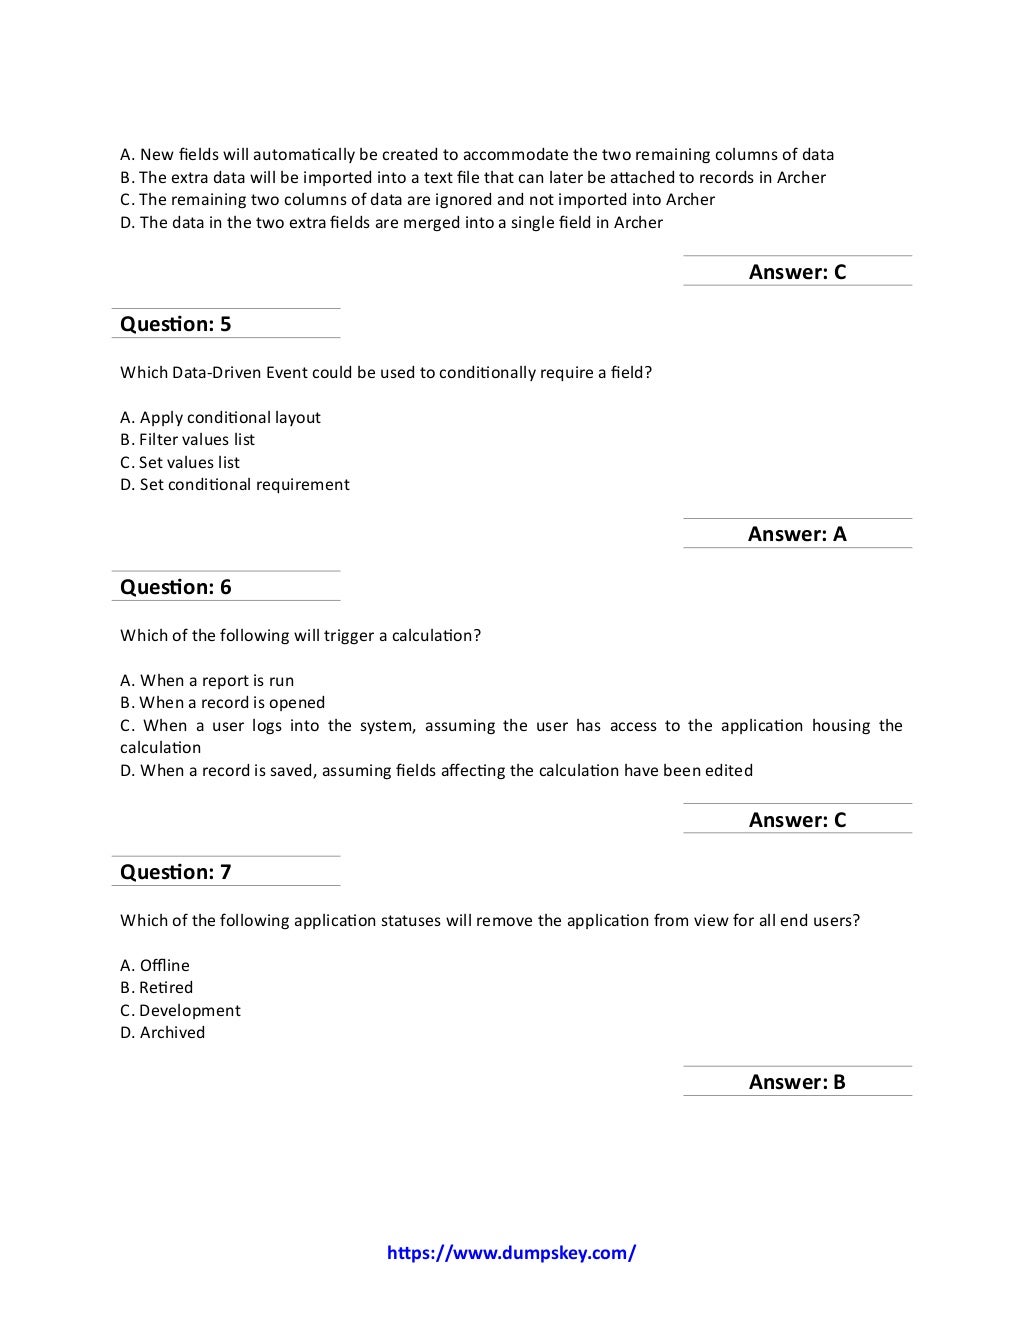 RSA 050-6201-ARCHERASC01 Cheat Sheet PDF Dumps ~ Exam Questions